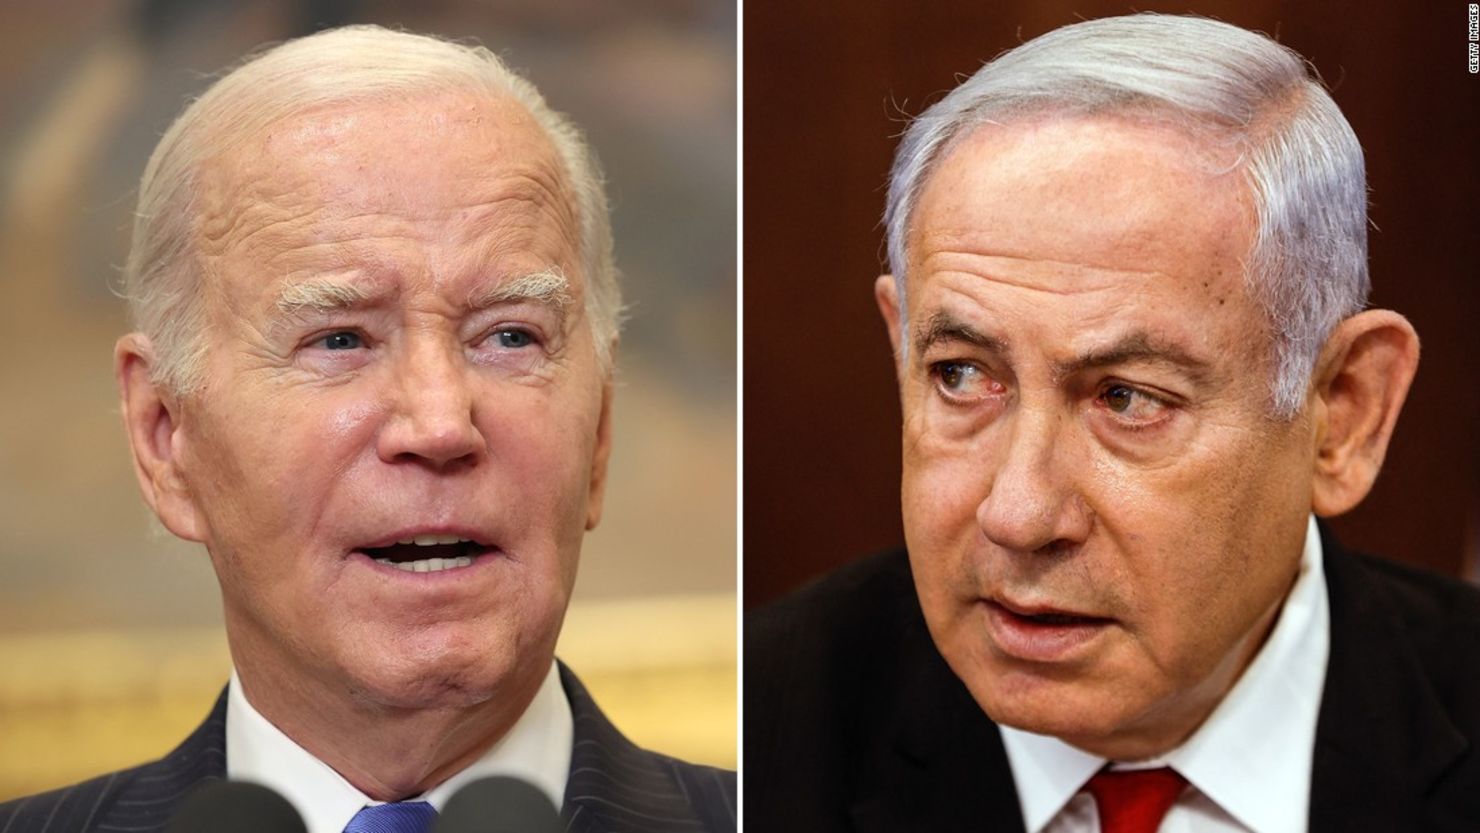 From left, U.S. President Joe Biden and Israeli Prime Minister Benjamin Netanyahu.